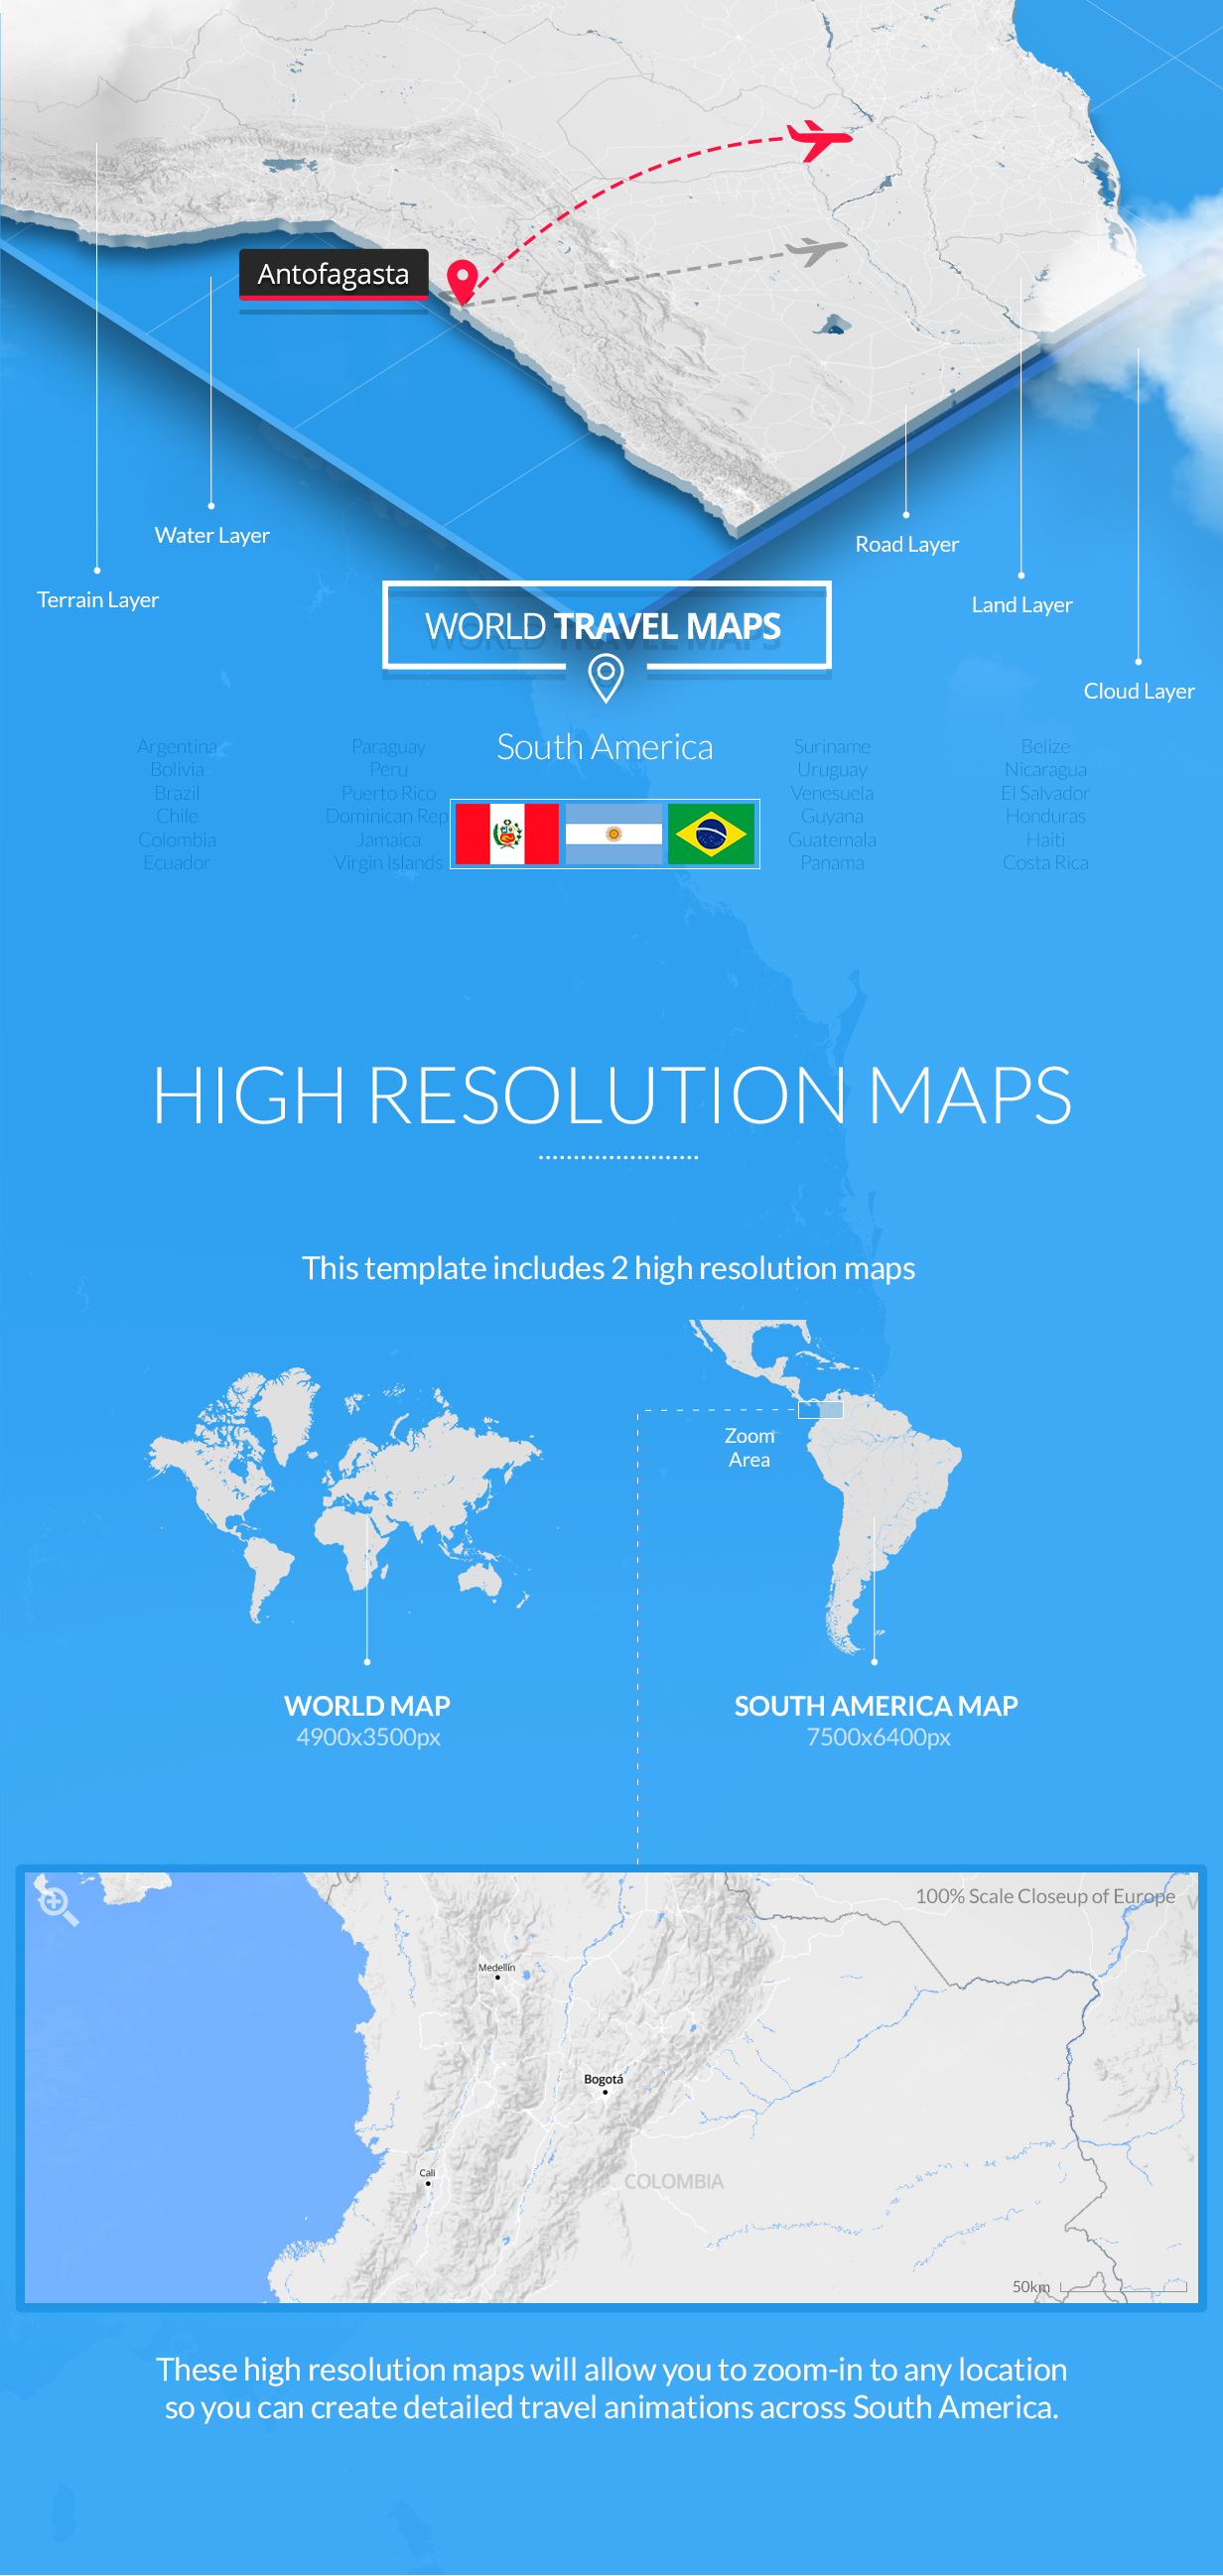 World Travel Maps - South America - 1